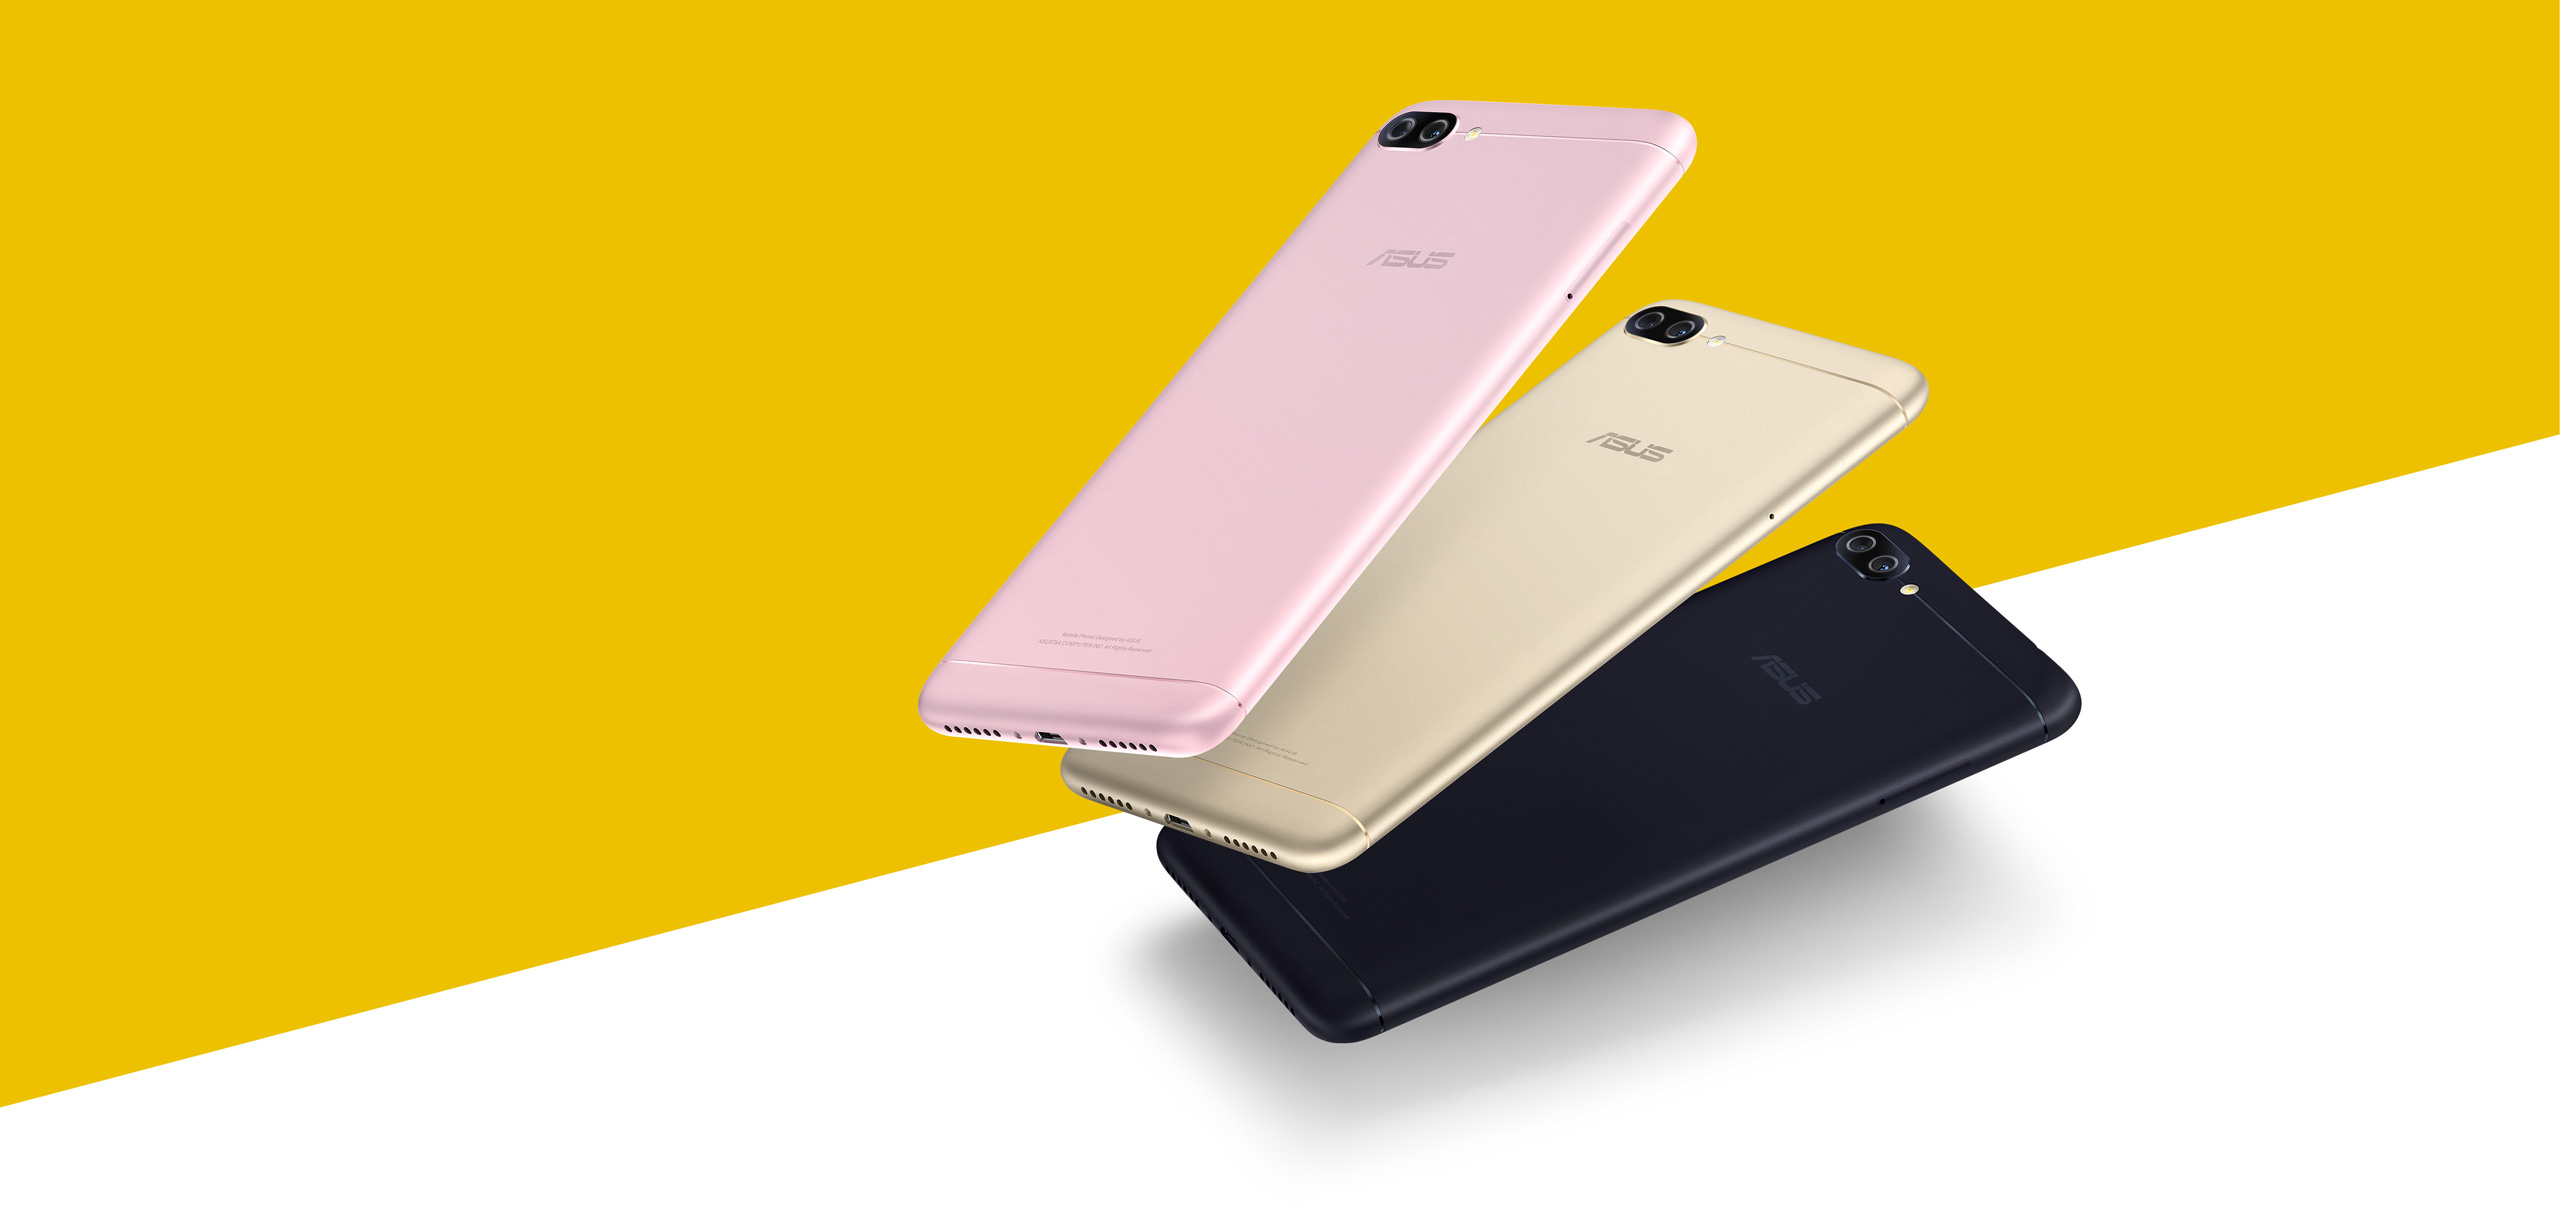 Asus Zenfone 4 Max Zc554kl Smartphone Review Notebookcheck Net Reviews